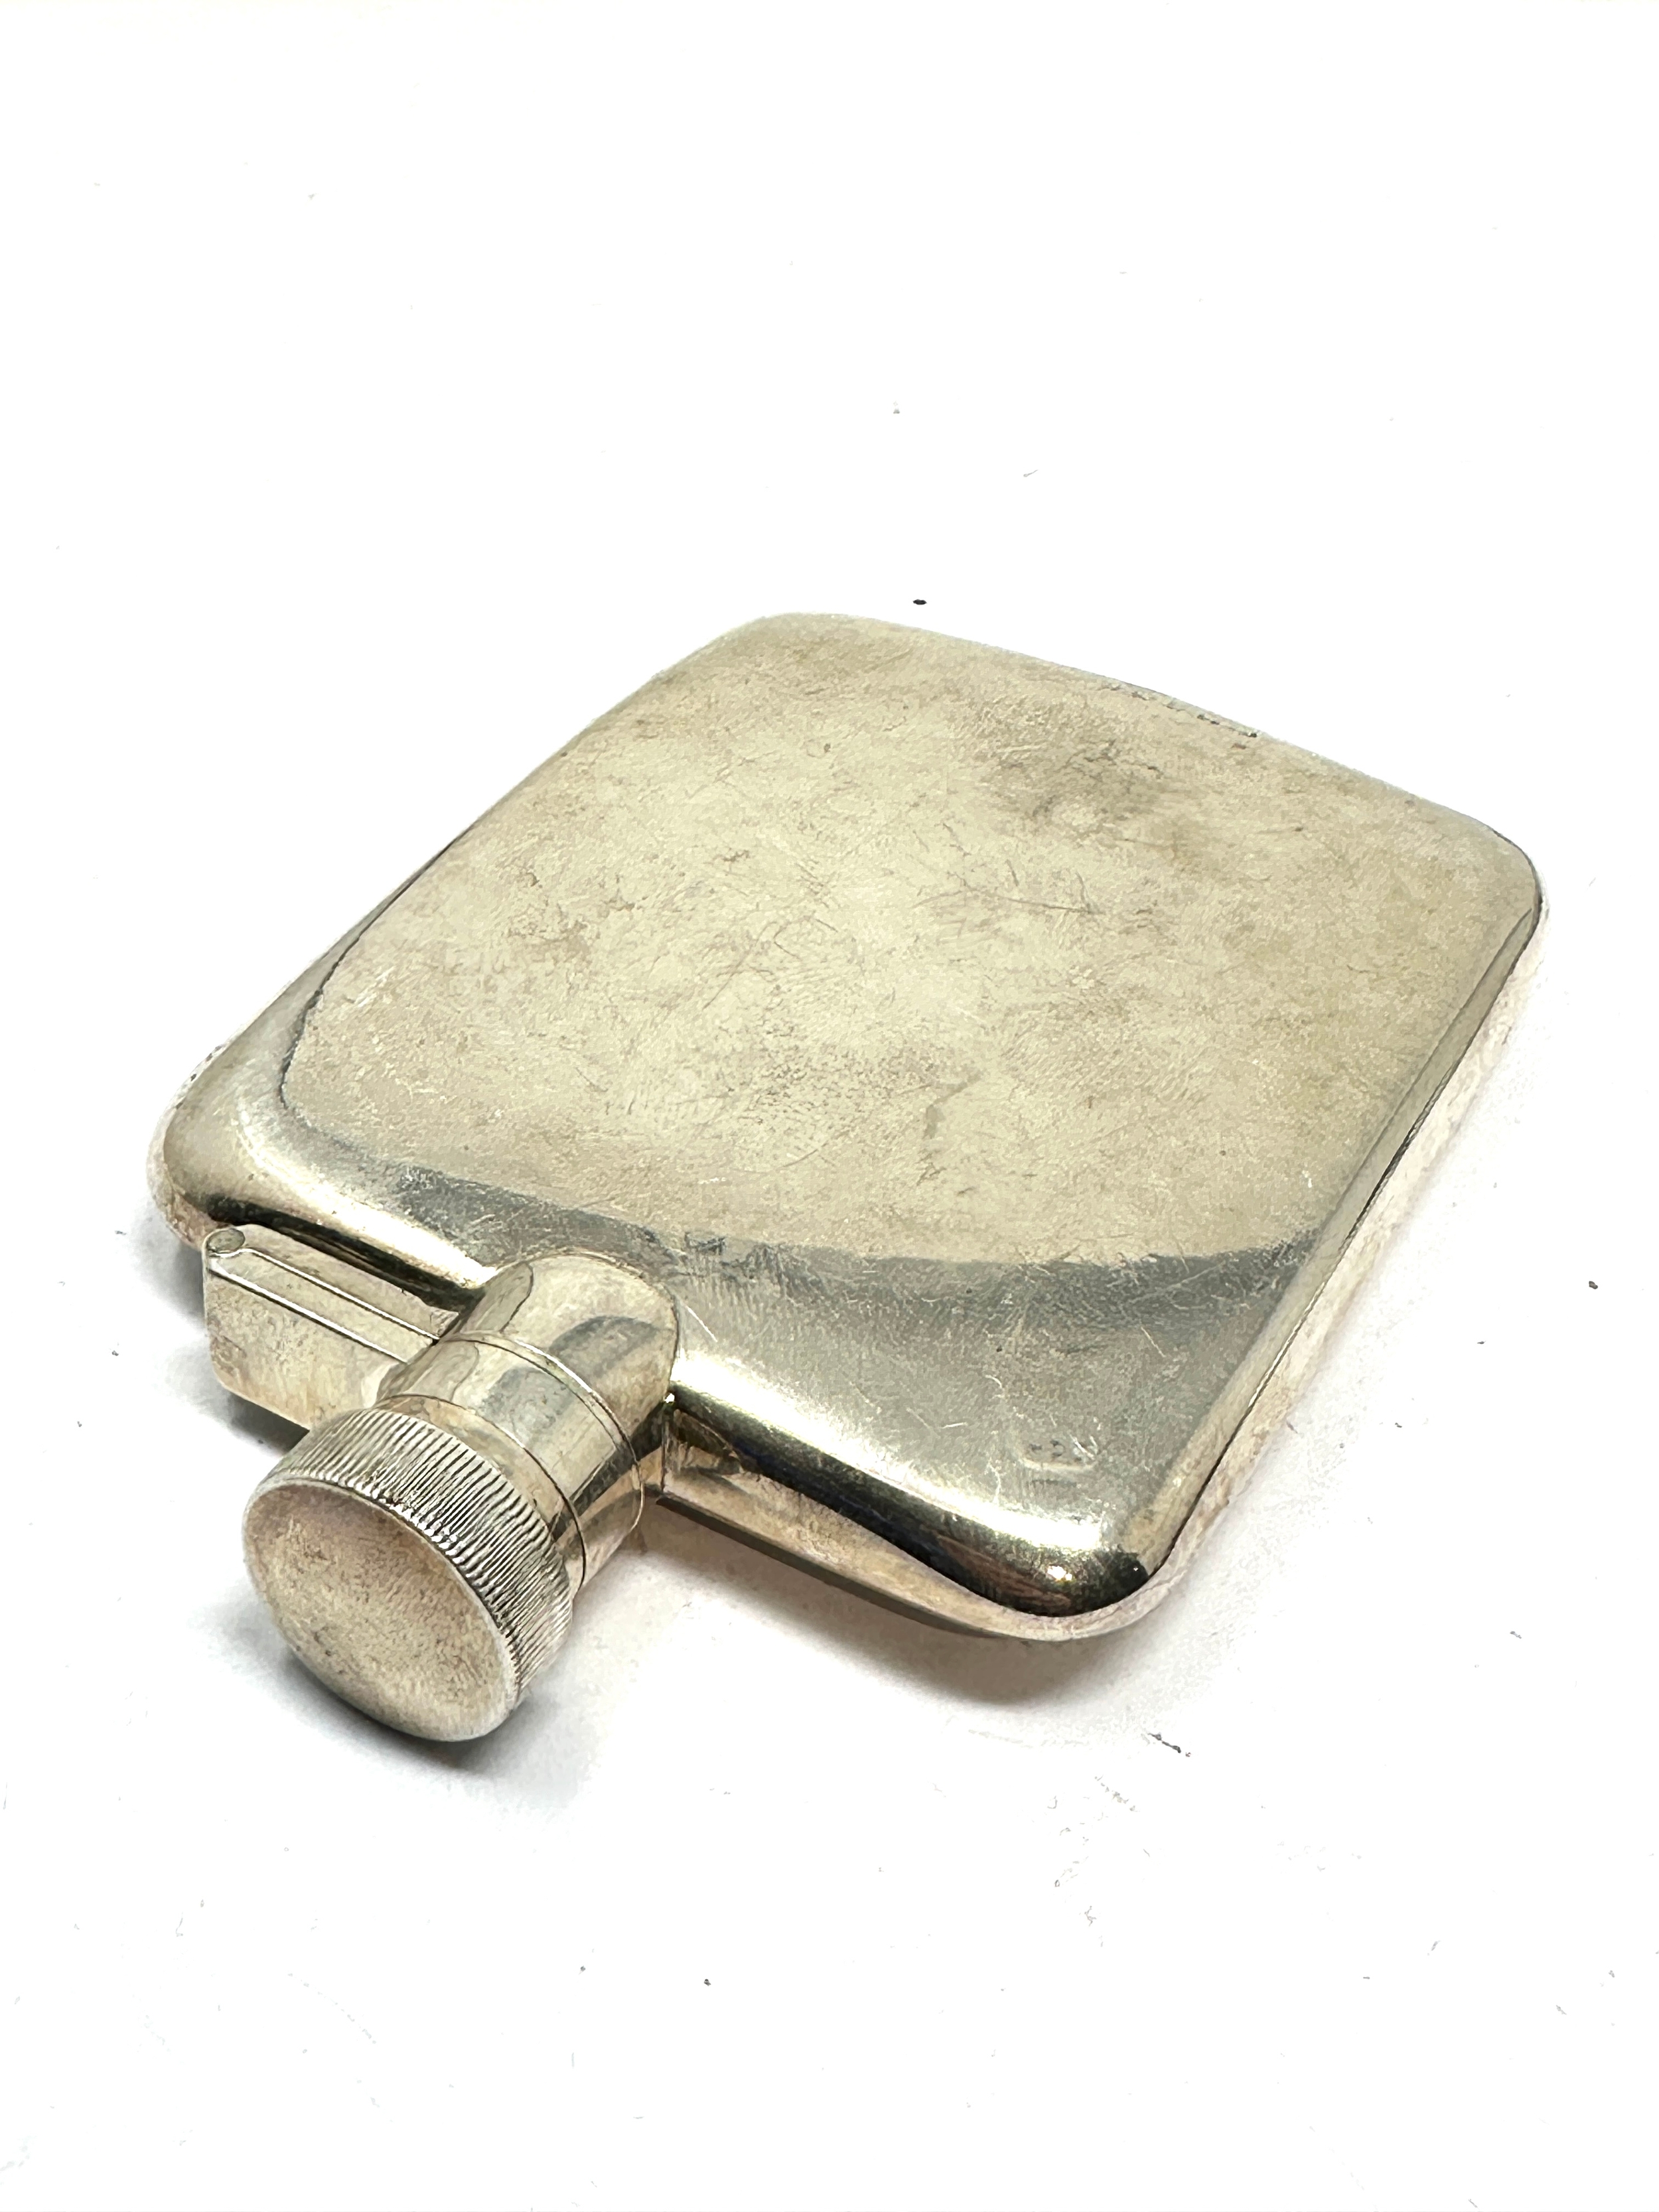 Vintage silver Hip Flask Birmingham silver hallmarks weight 160g - Image 2 of 4